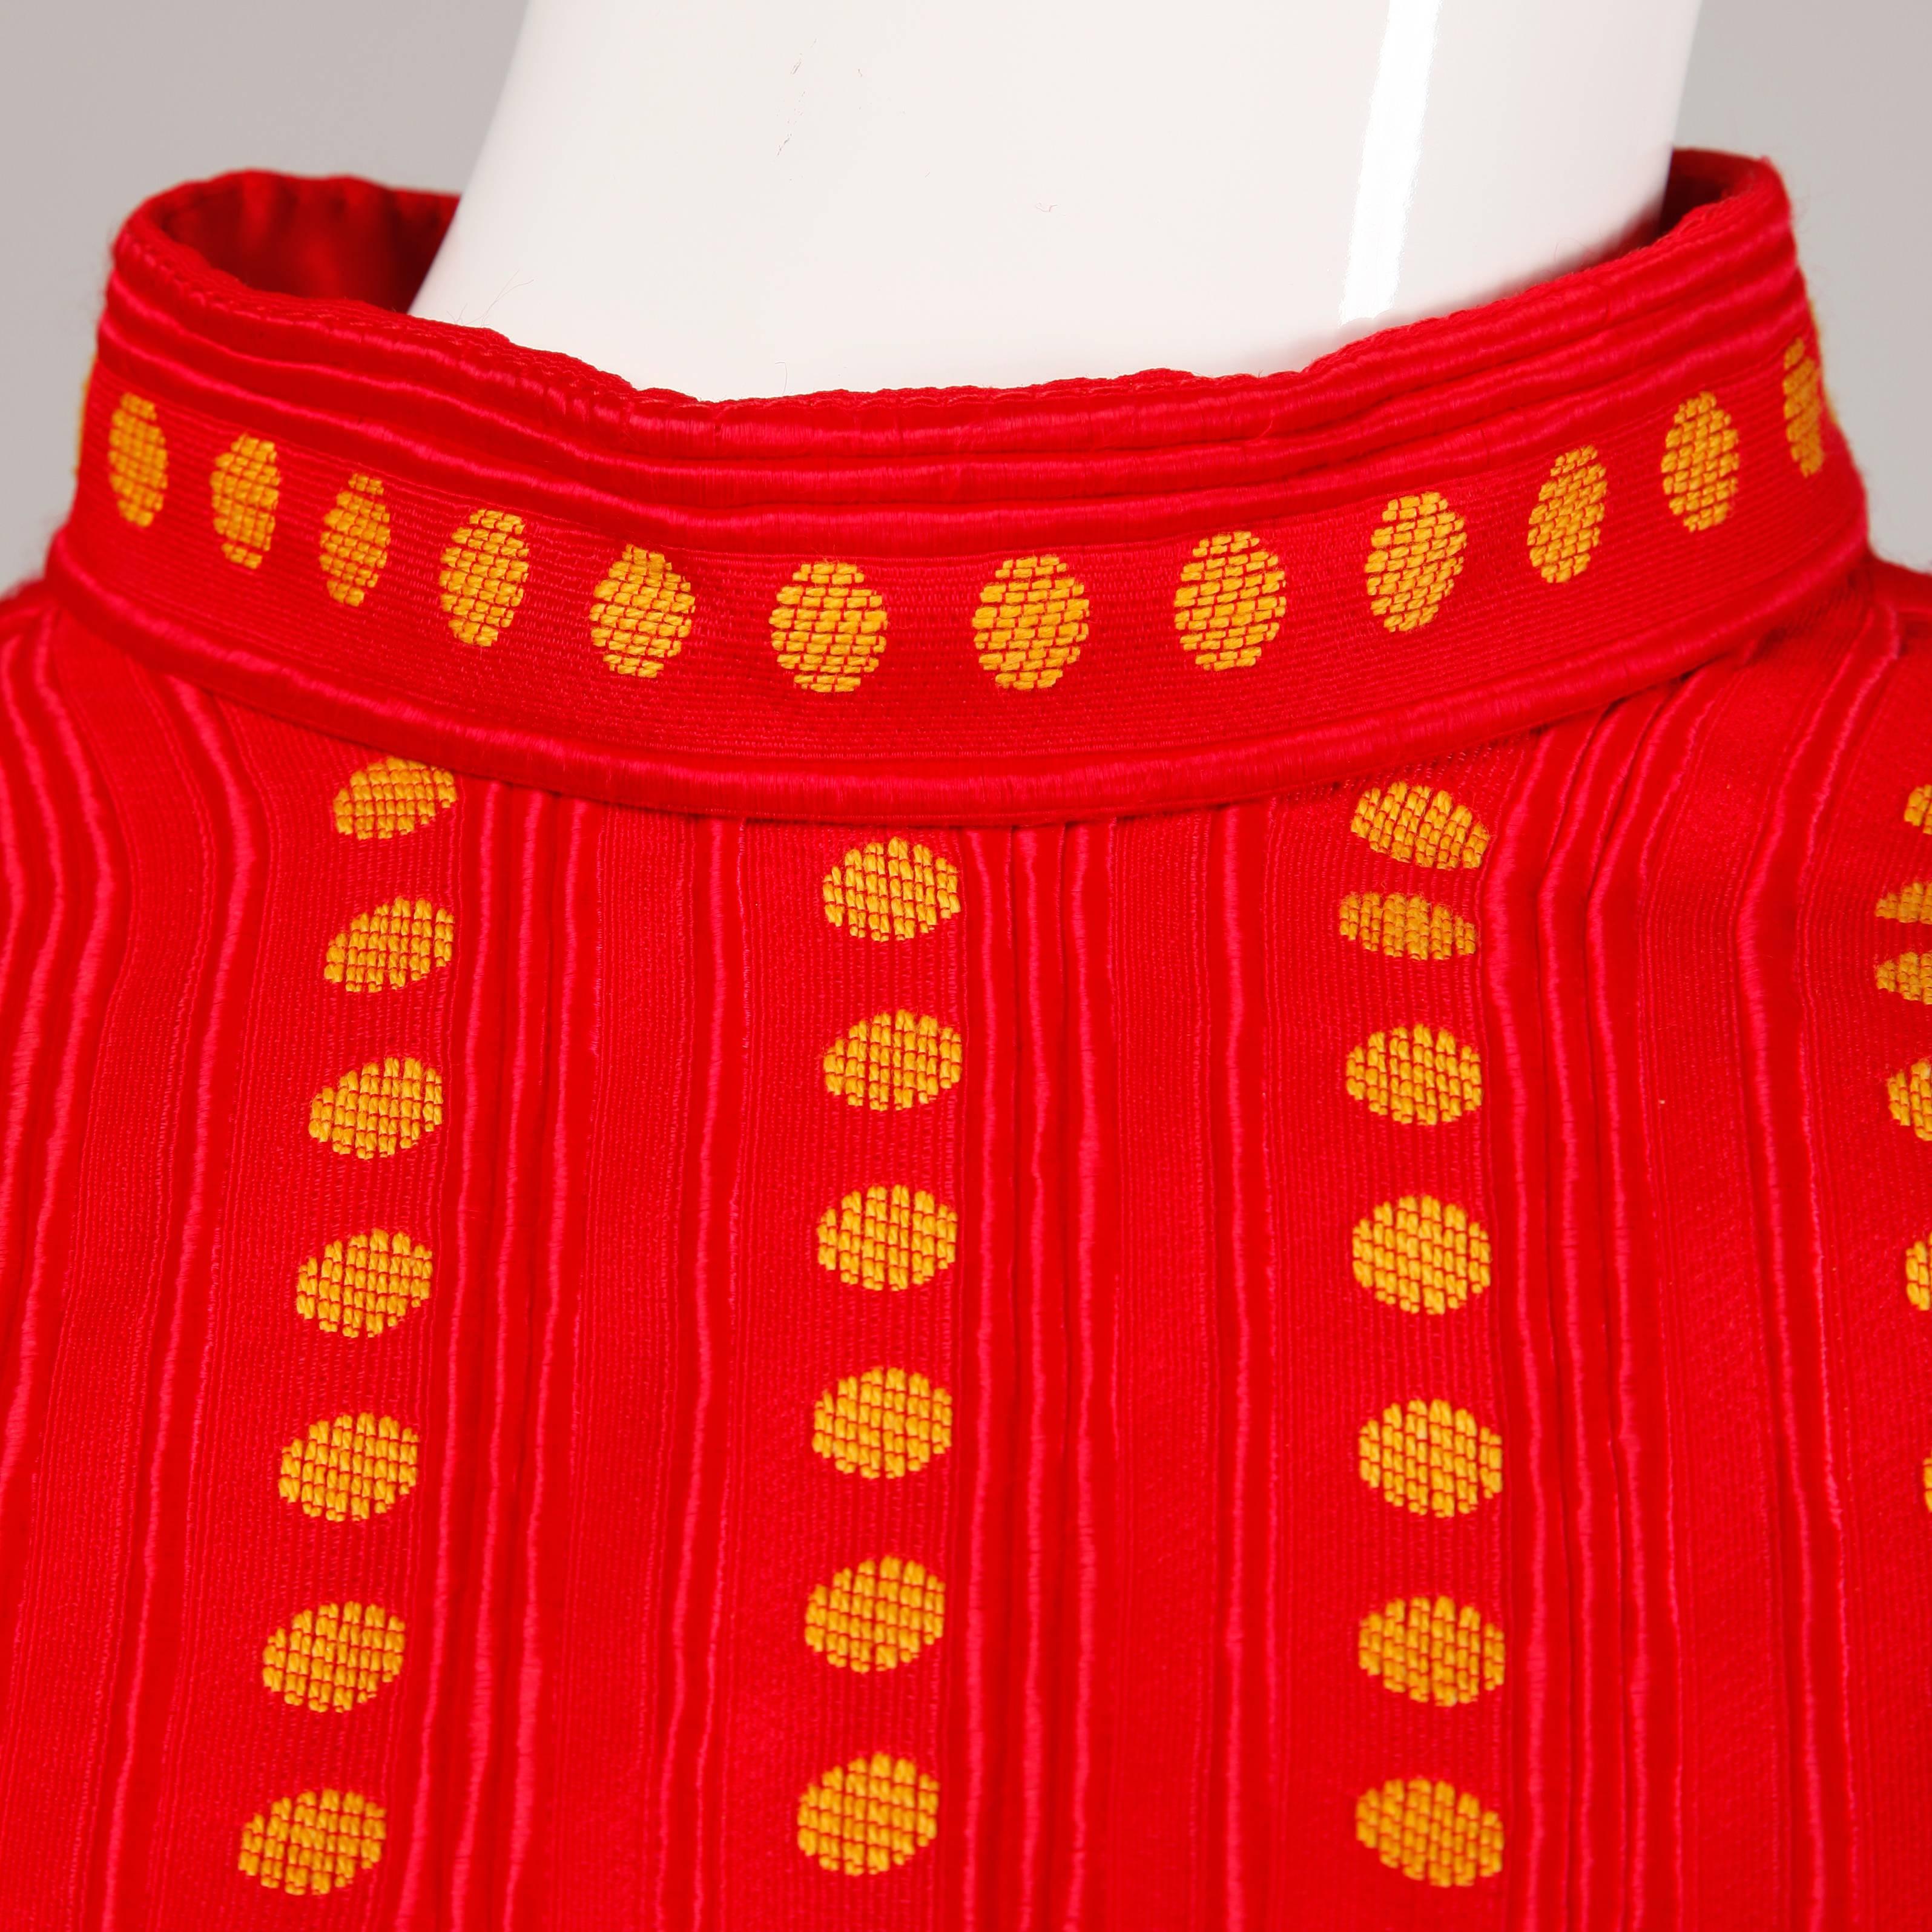 Rare Kreinick 1960s Vintage Red + Yellow Polka Dot Mod Dress + Jacket Ensemble For Sale 2